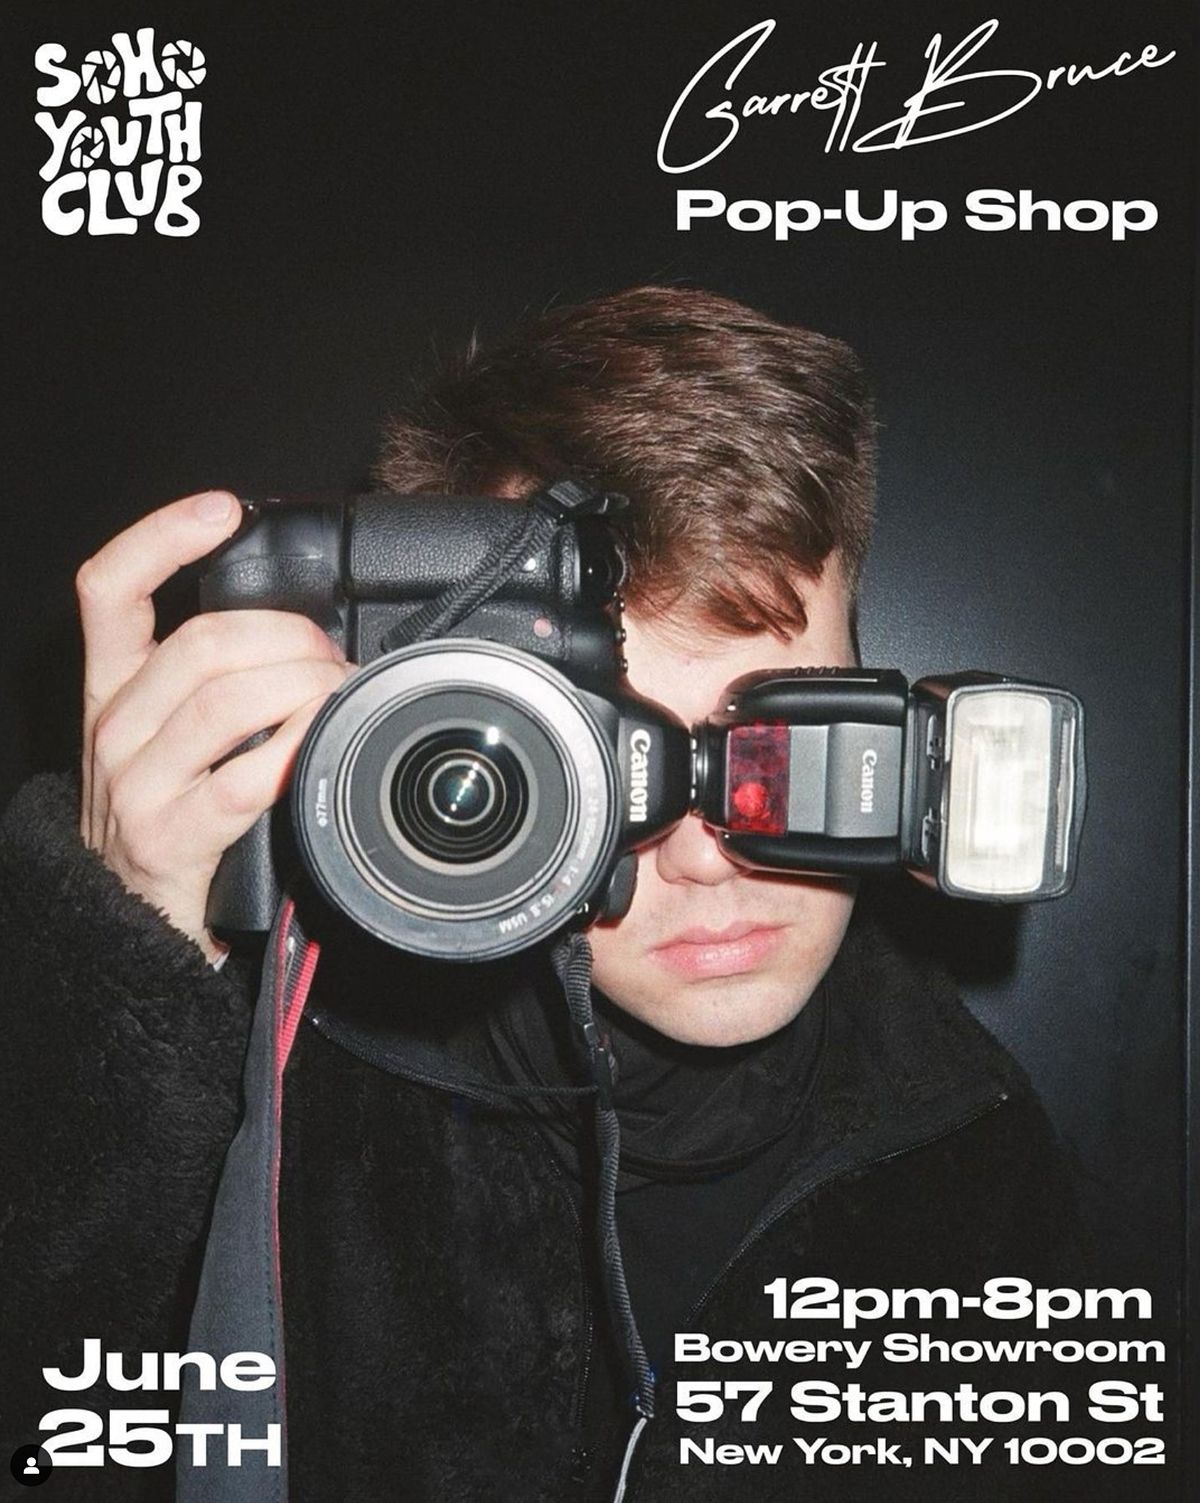 Garrett Bruce x Soho Youth Club Photography Workshop & Pop Up